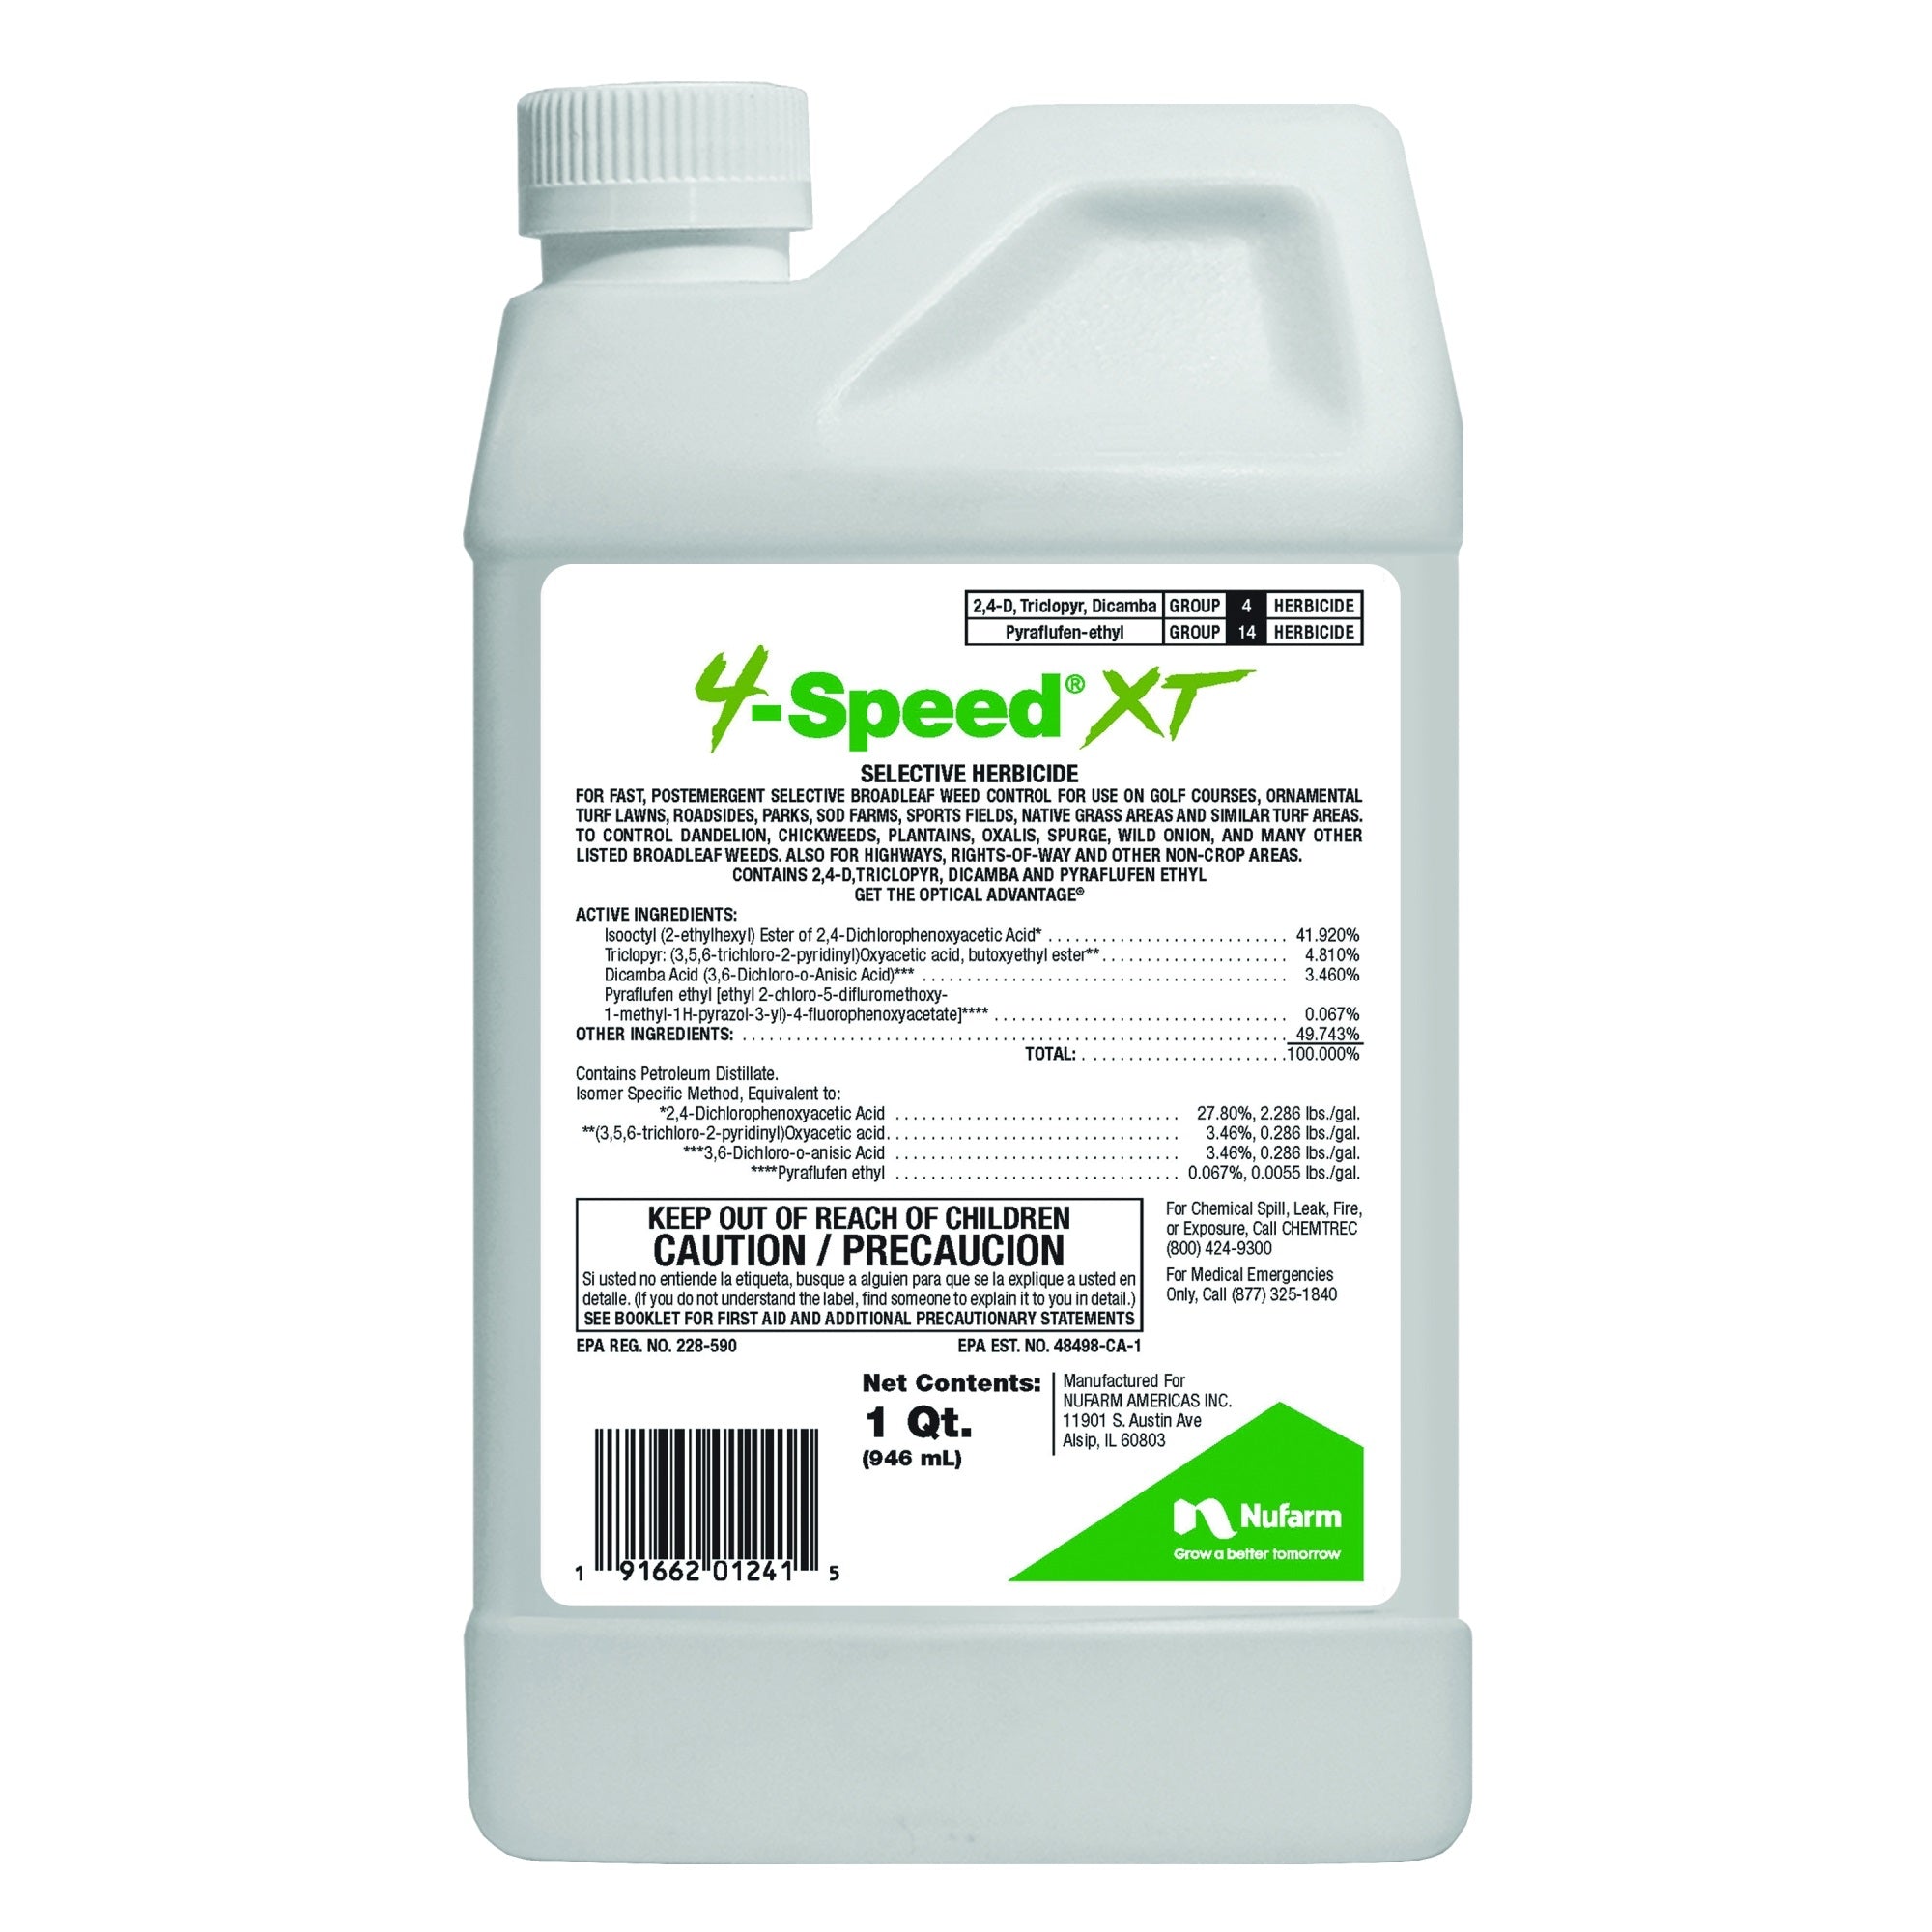 Nufarm 4-Speed XT Selective Weed Killer Herbicide, 32oz